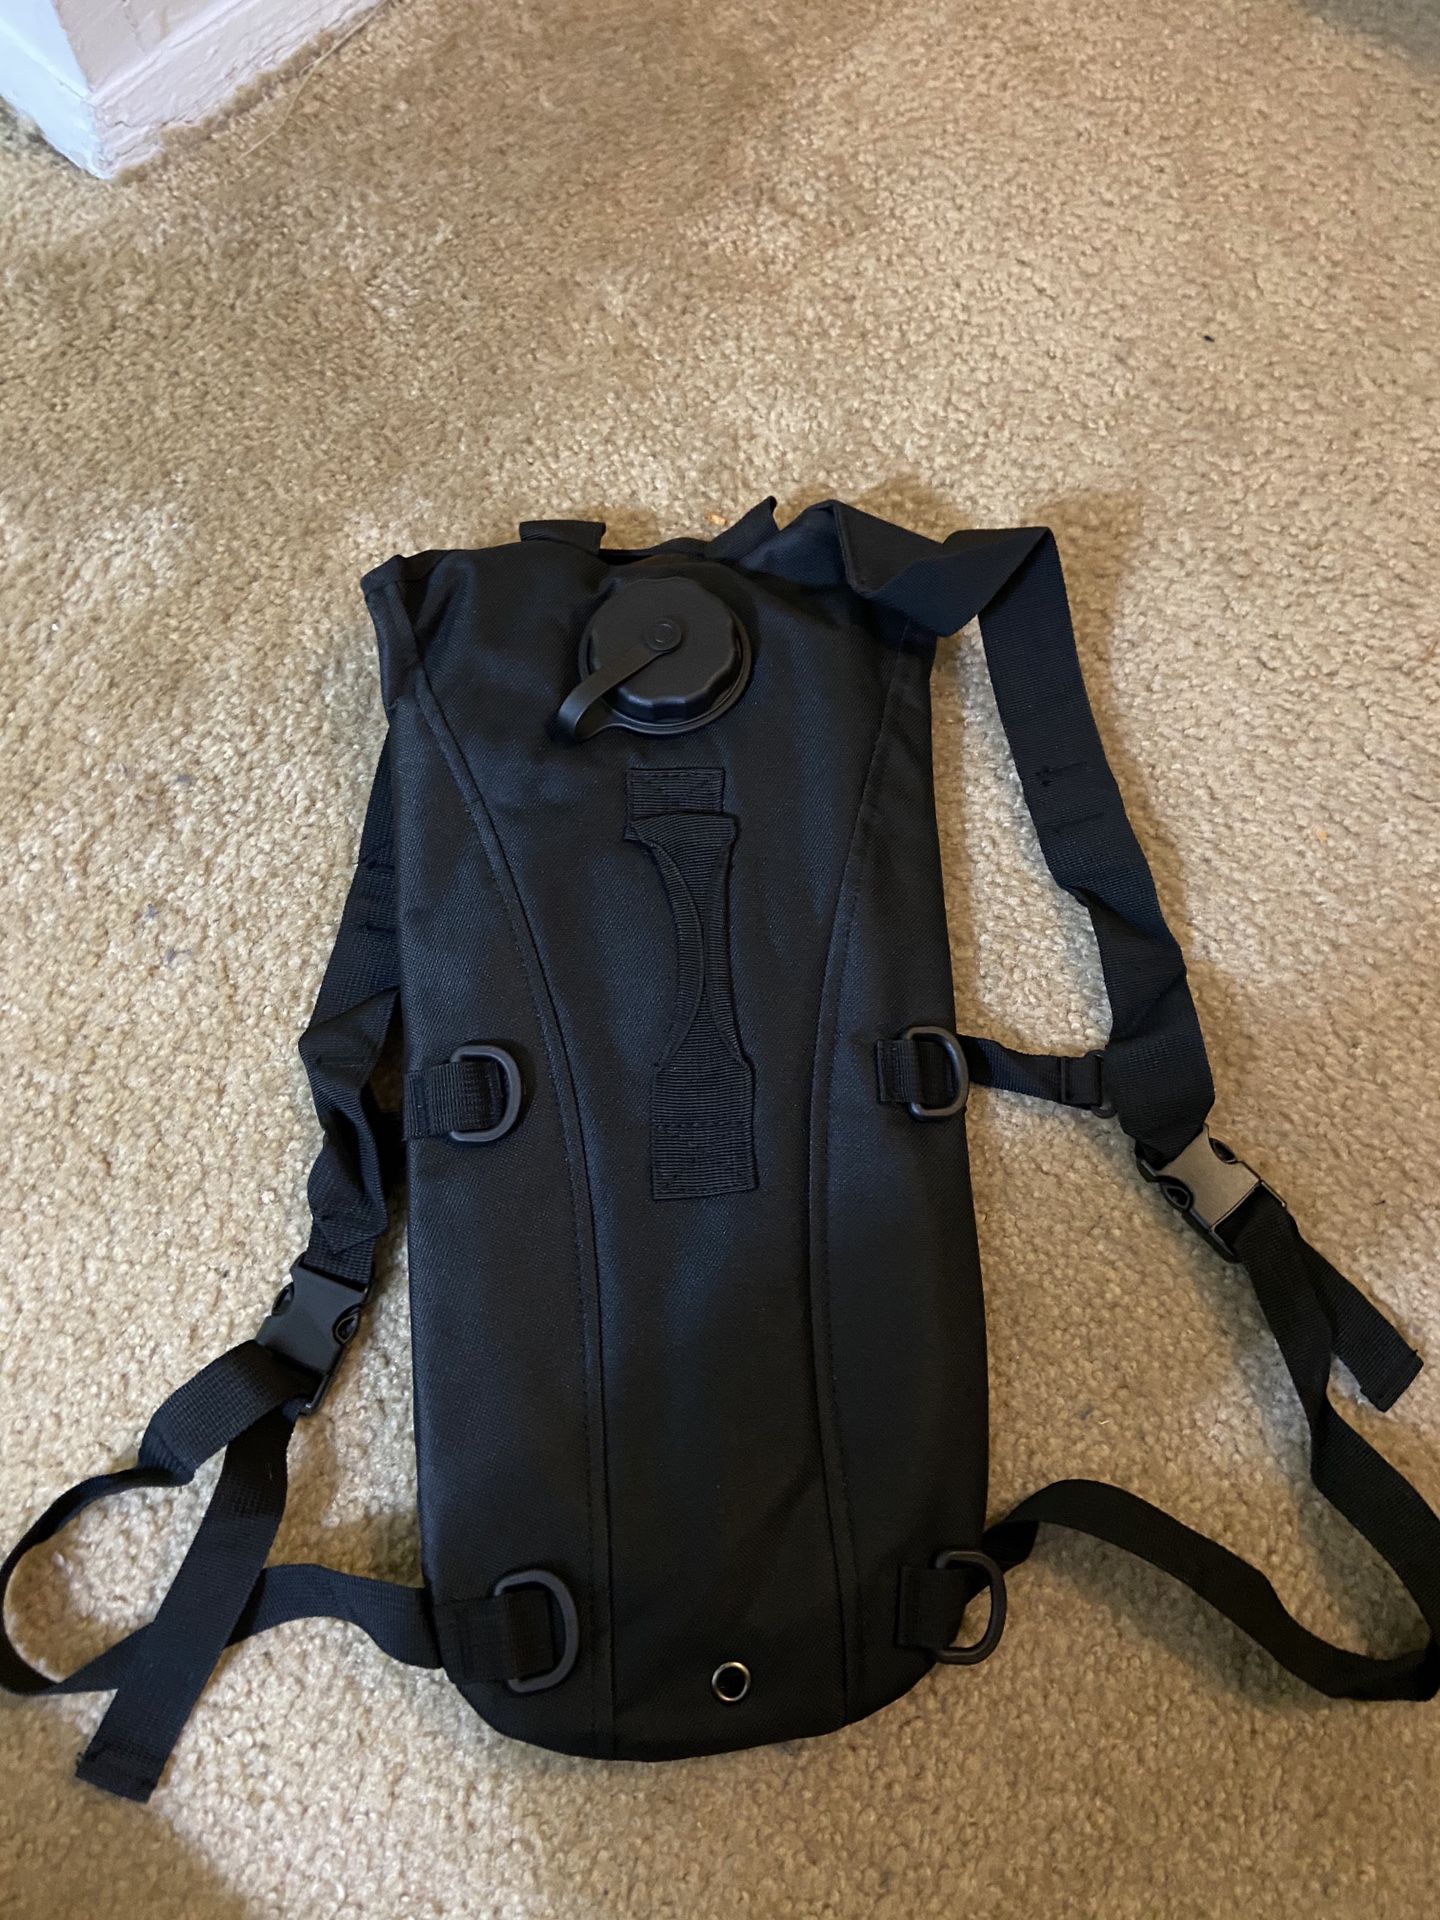 Backpack Water Holder 2 for $15